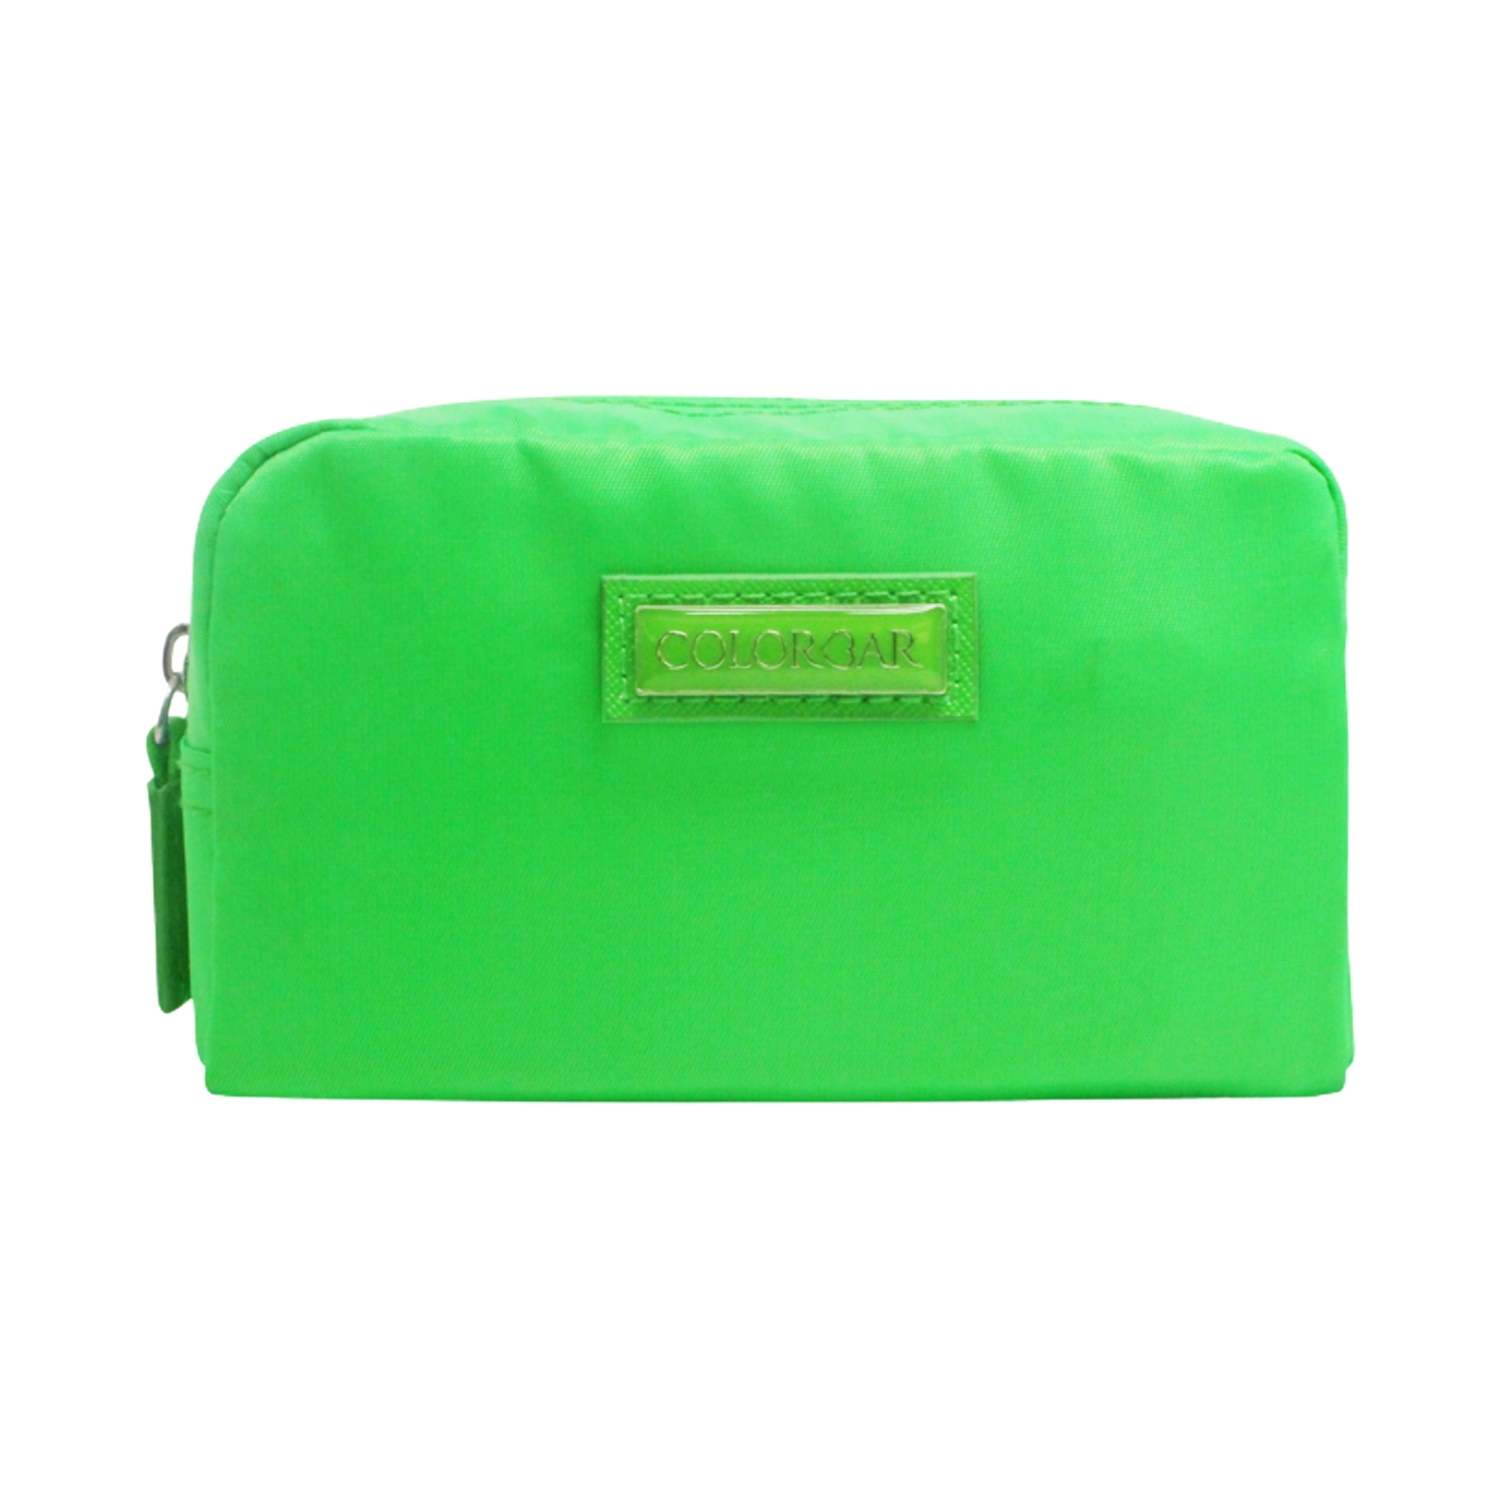 Colorbar | Colorbar Mini Pouch New - Green